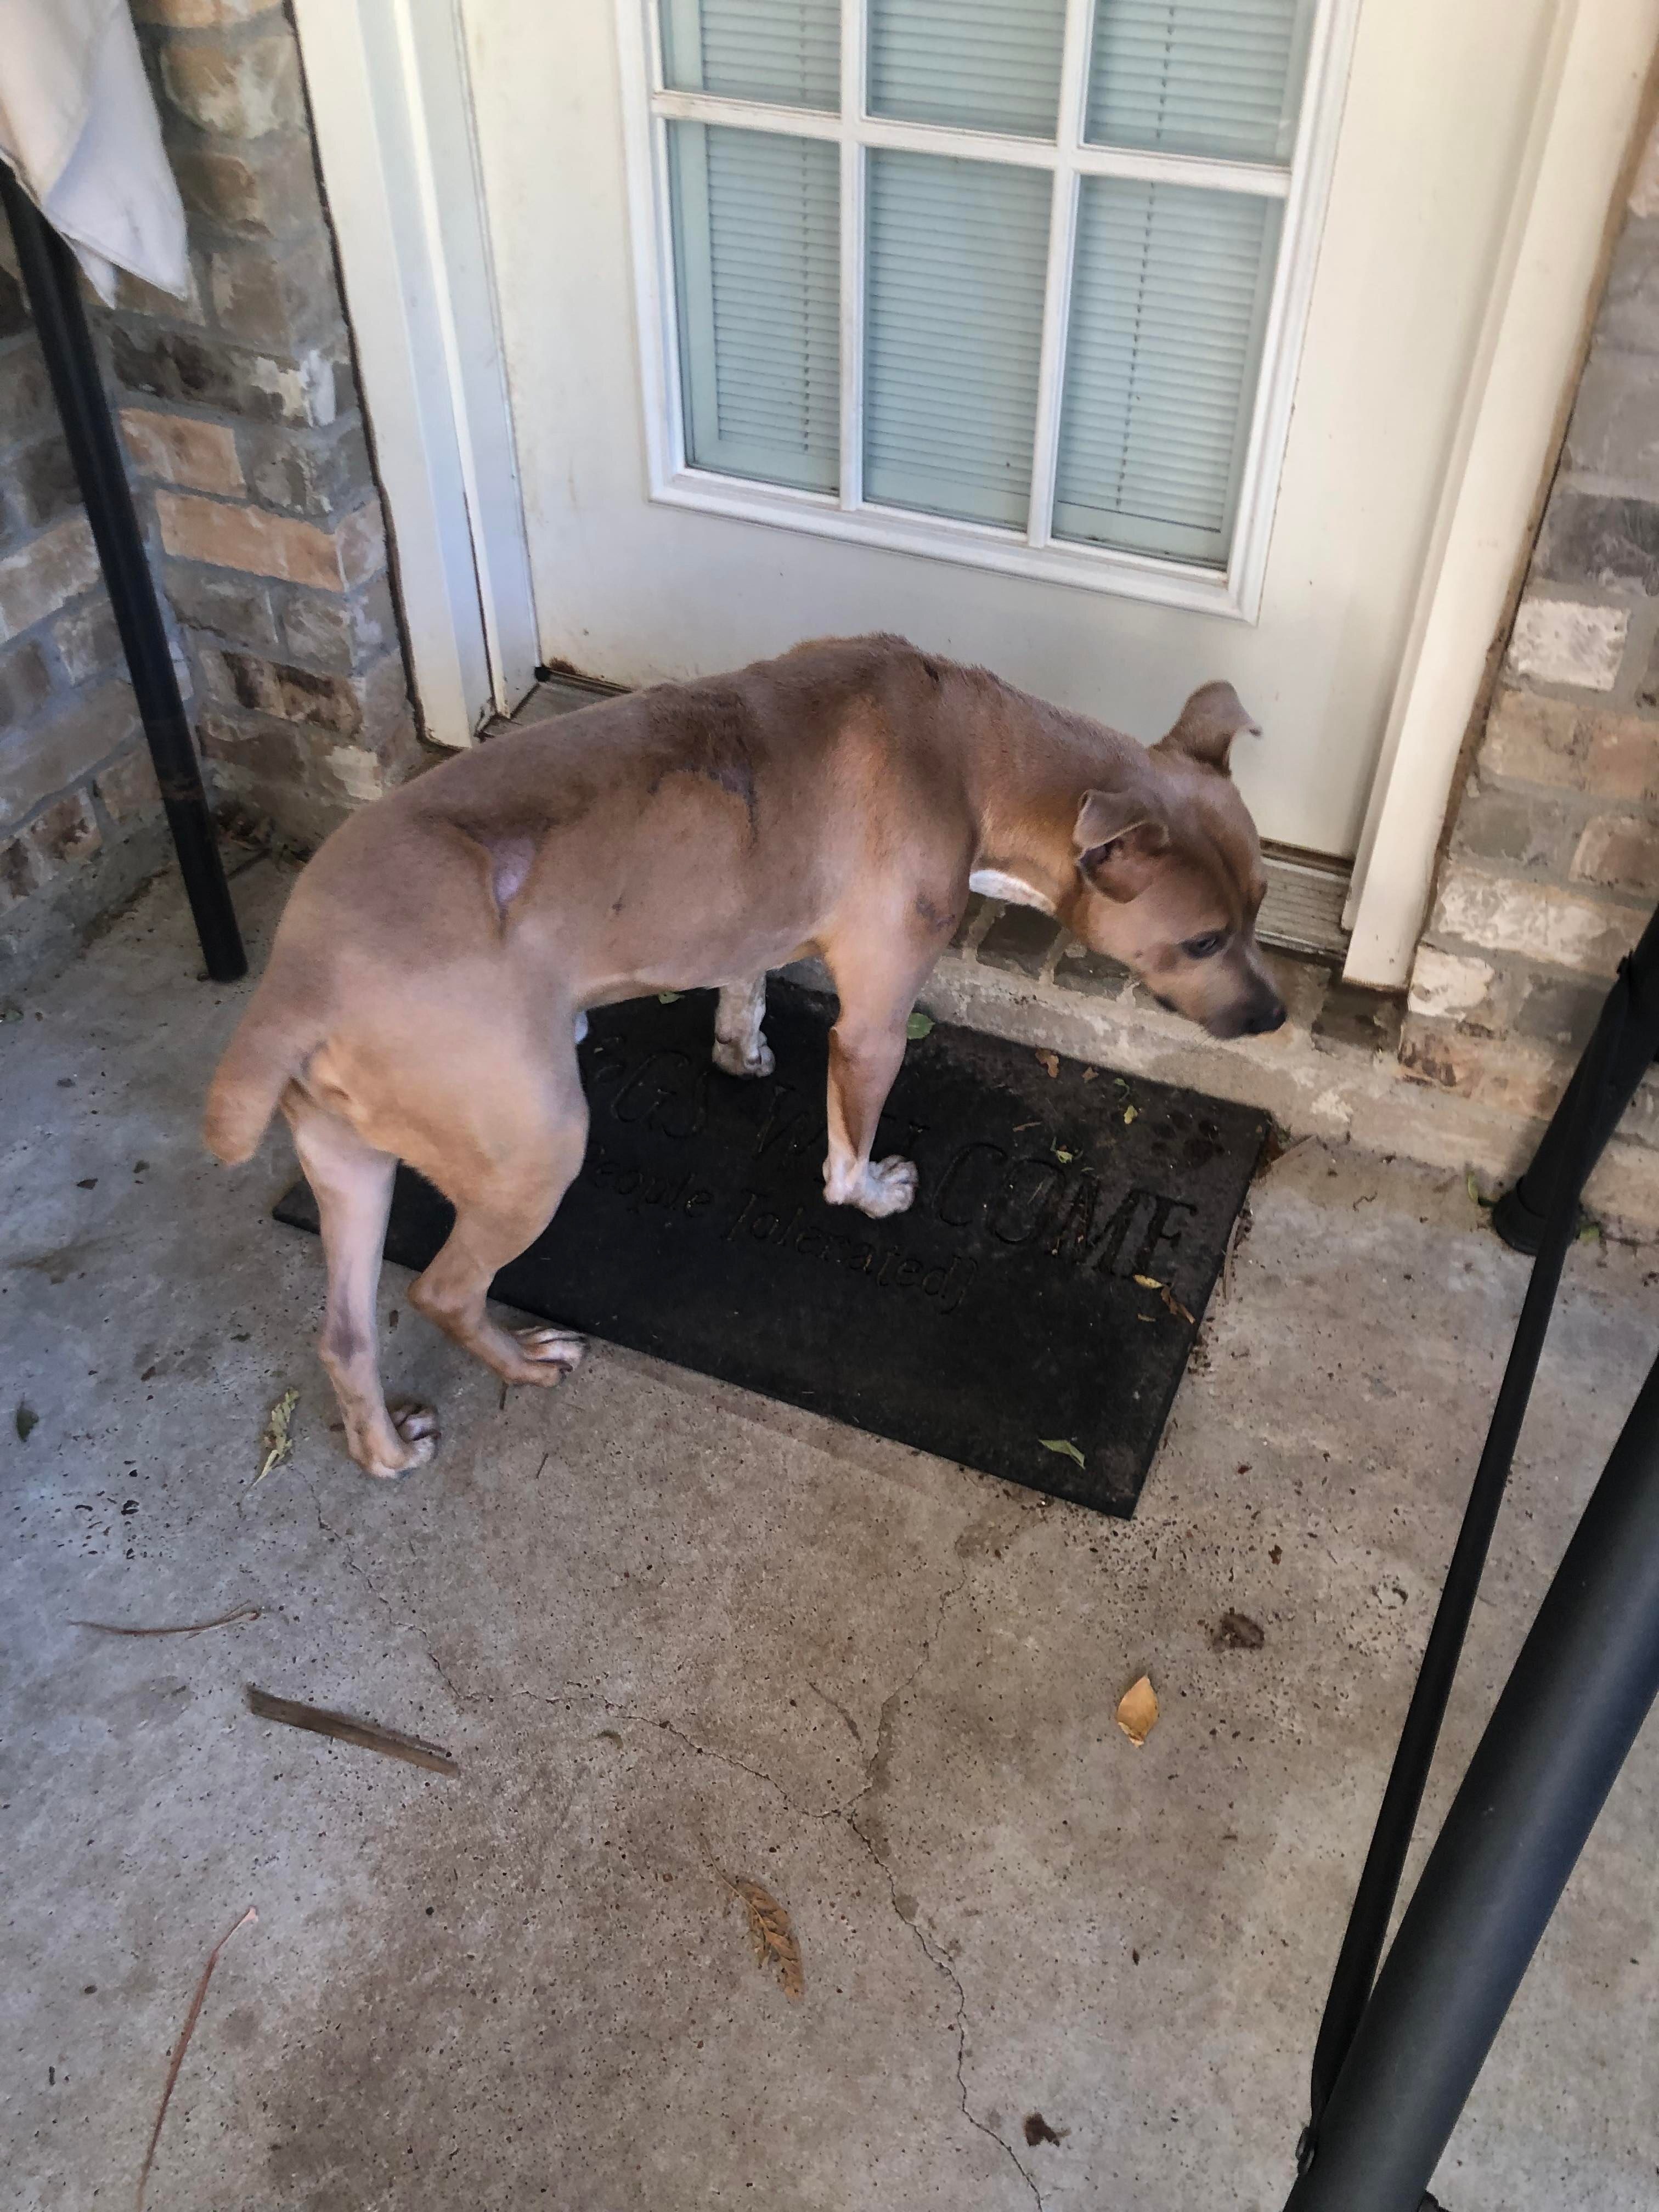 BRINKS, an adoptable Pit Bull Terrier in Orange, TX, 77632 | Photo Image 5